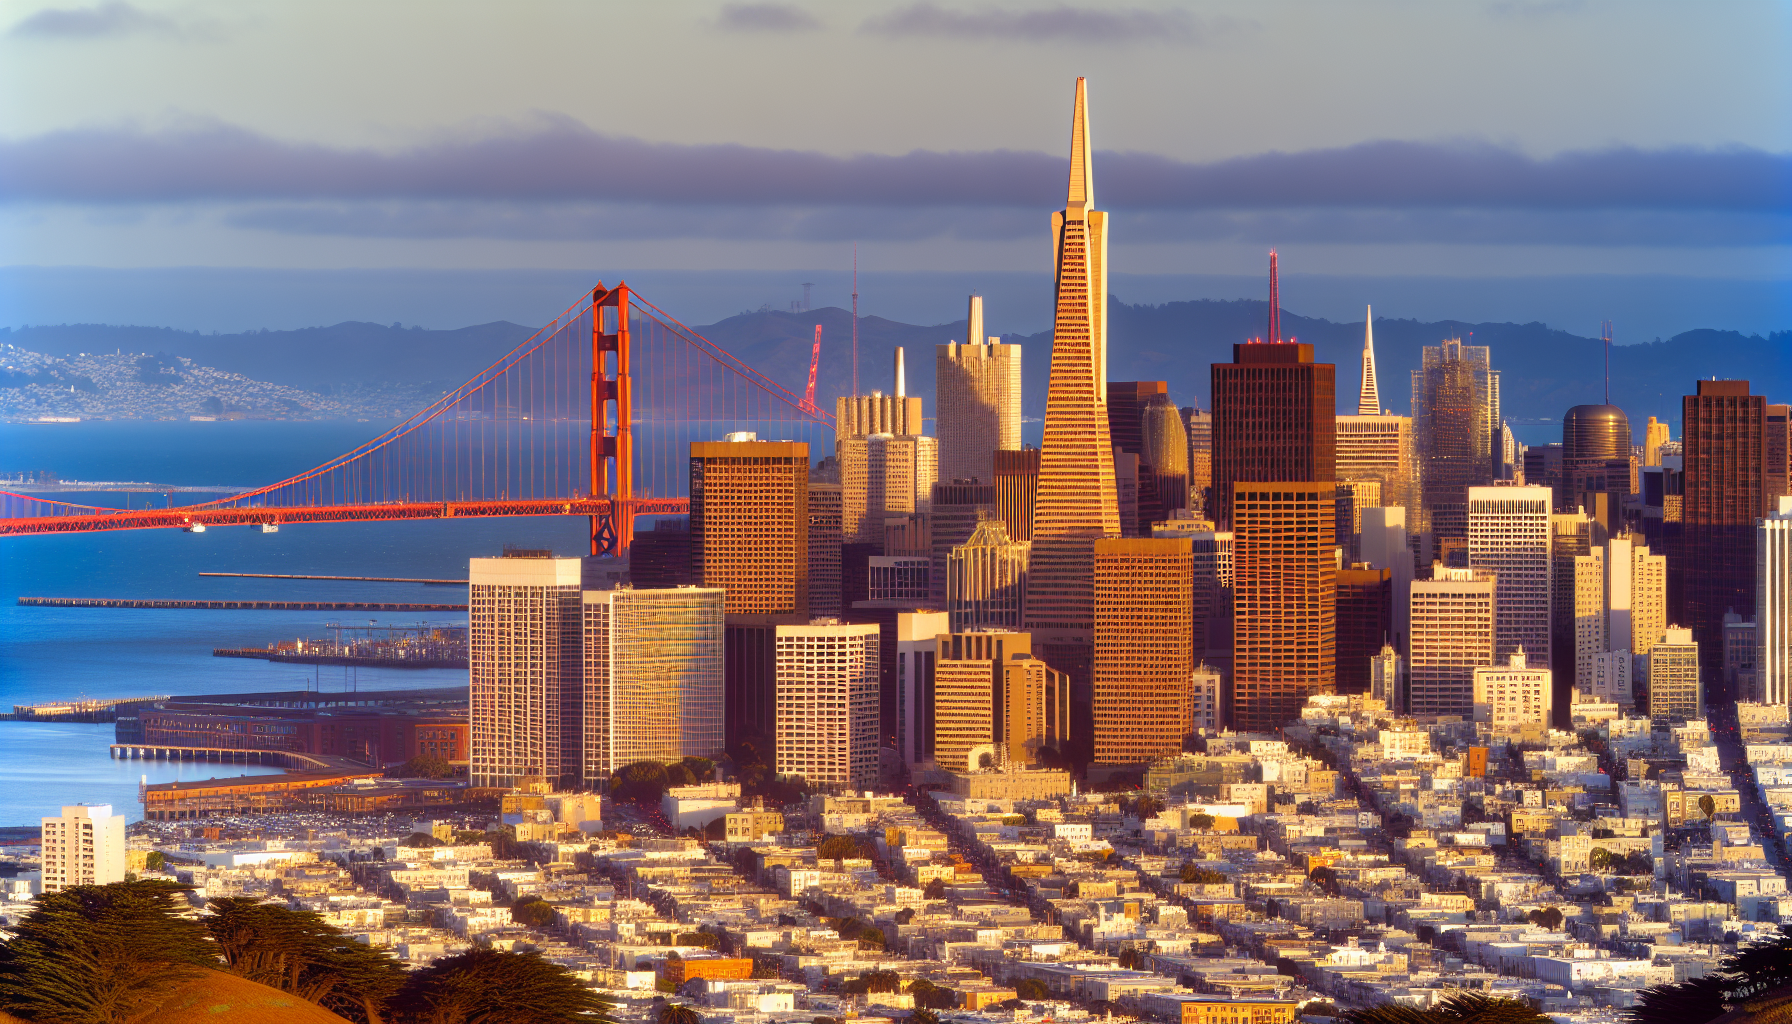 Diverse San Francisco skyline with iconic landmarks